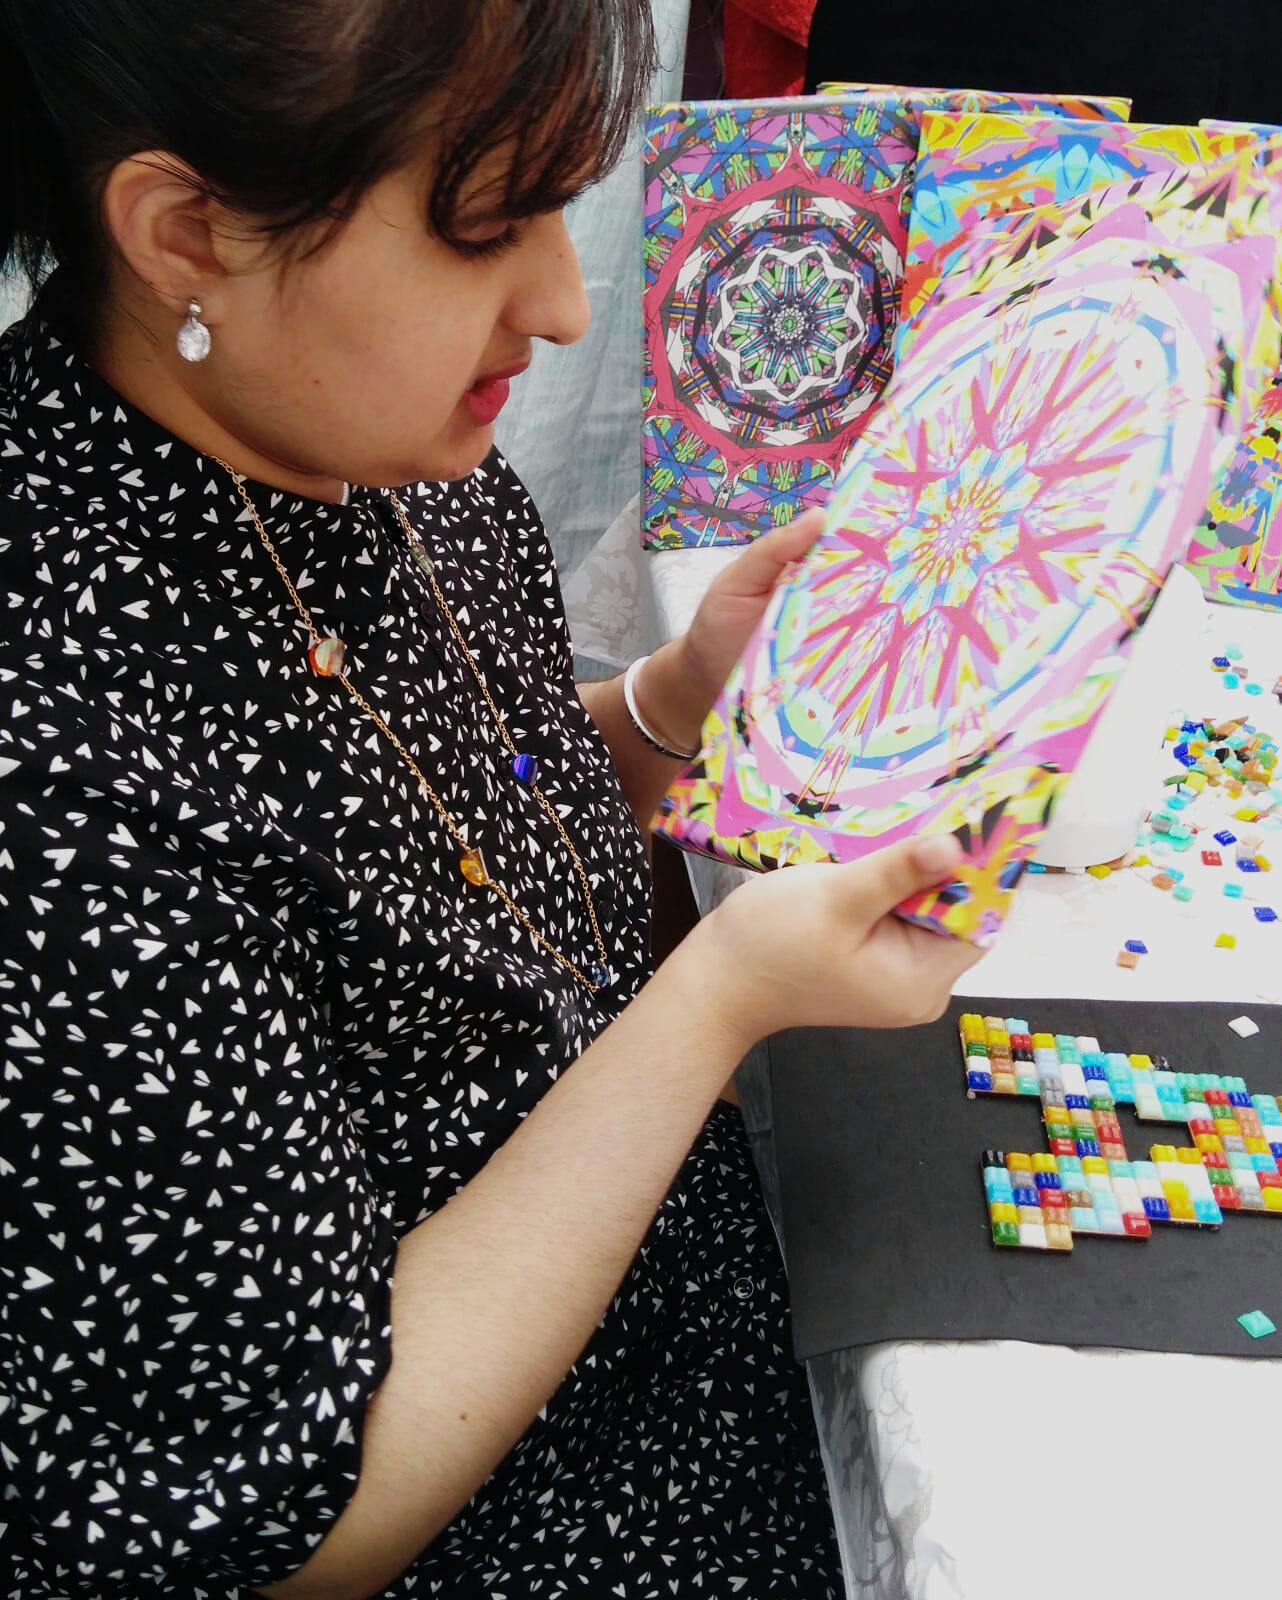 Amirah working on some of her kaleidoscope artwork